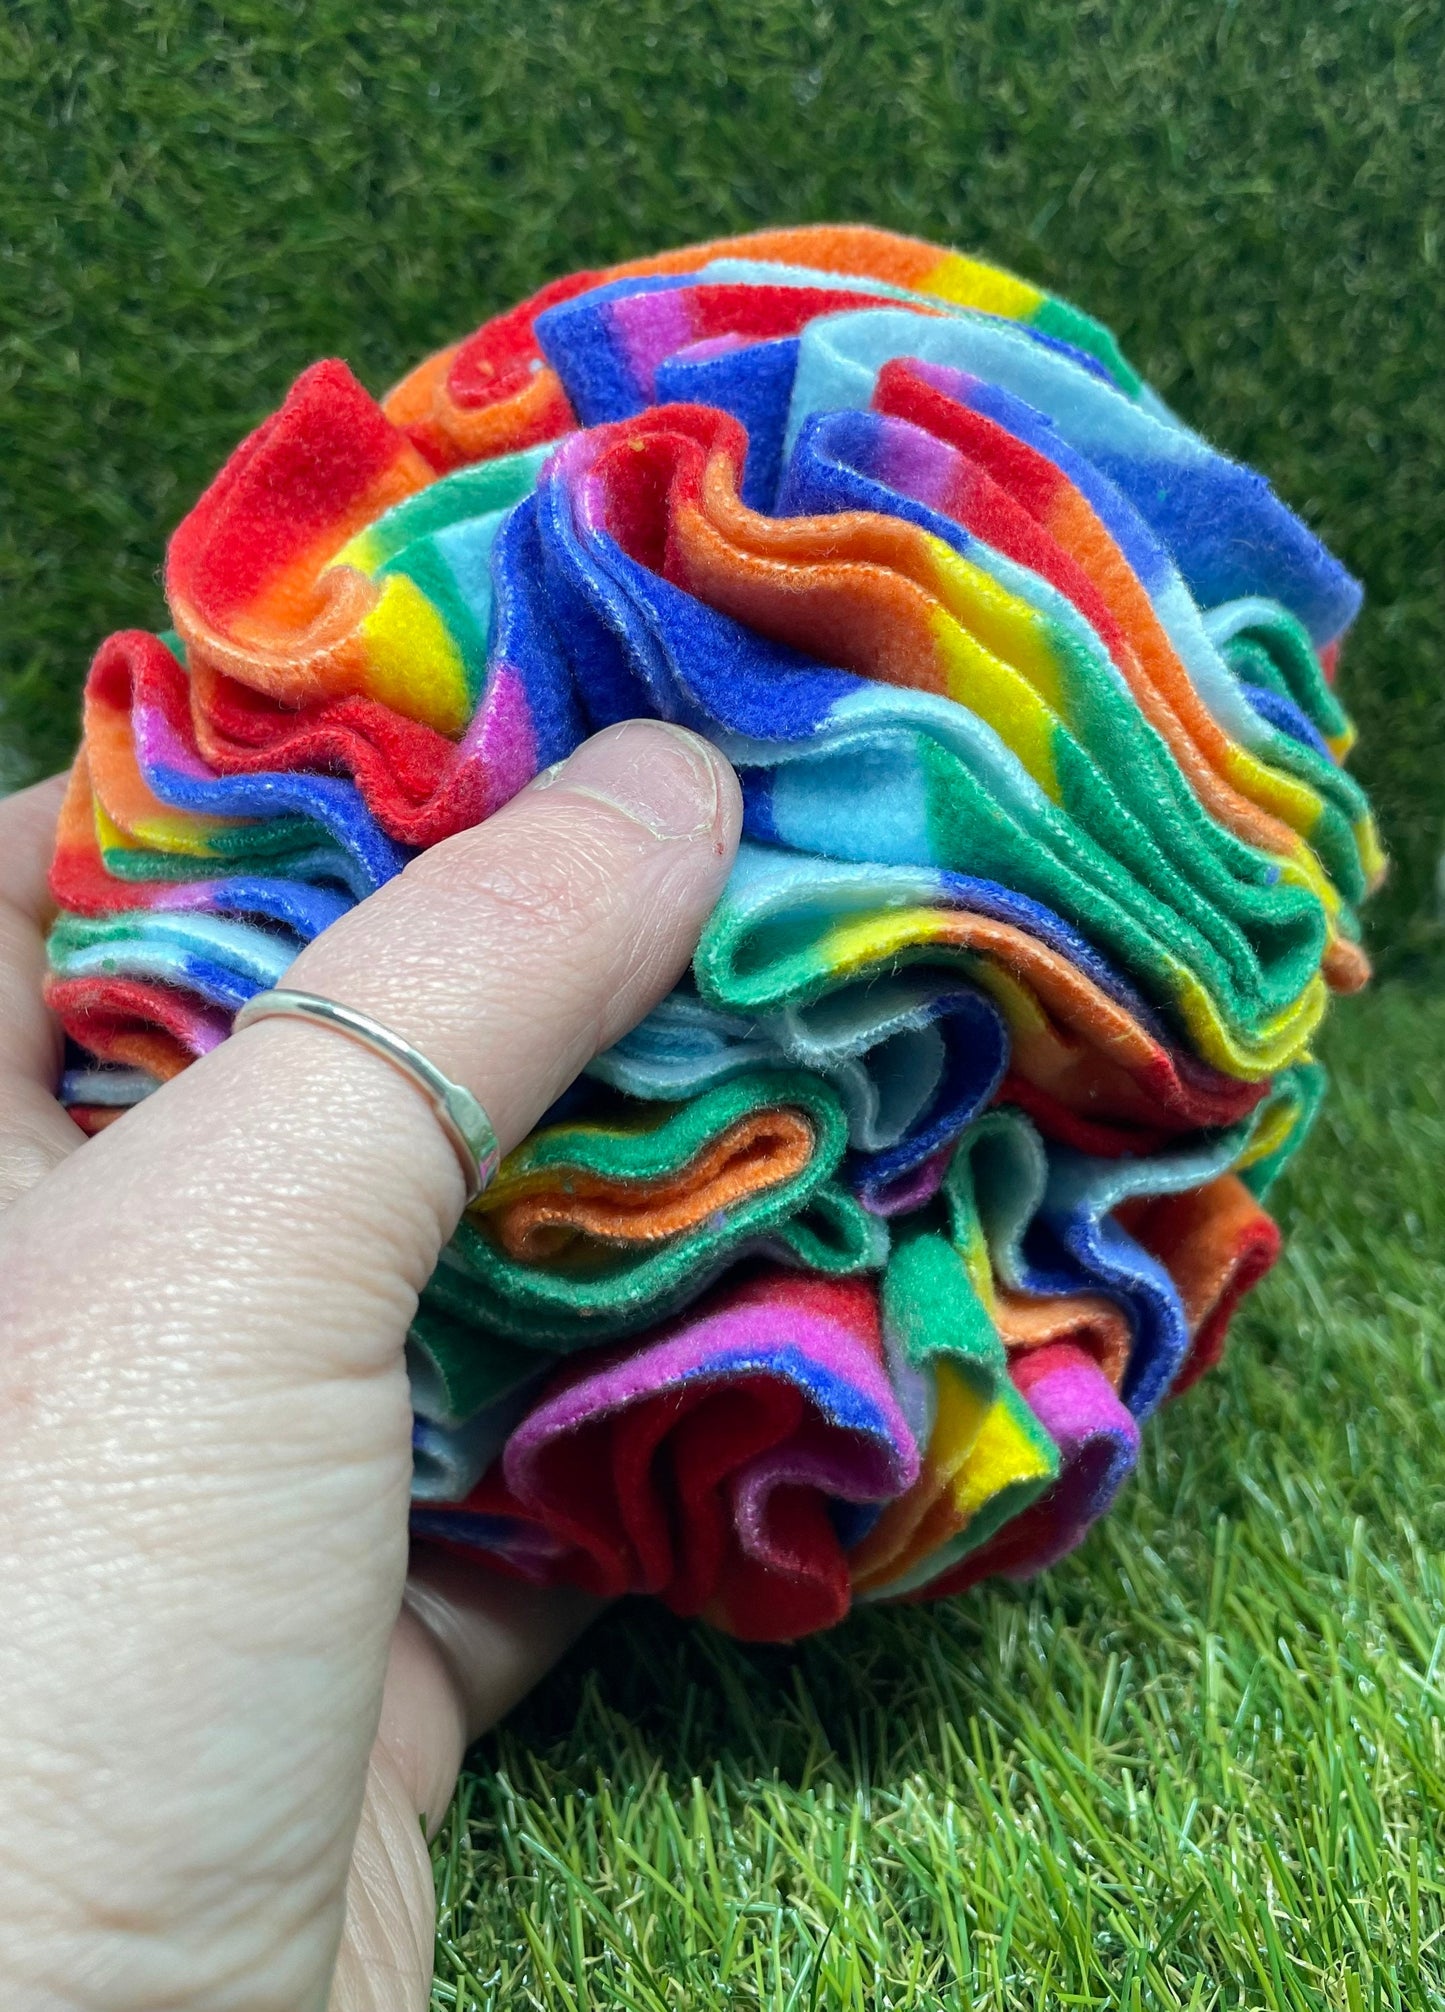 Snuffle ball rainbow, 6 inch size